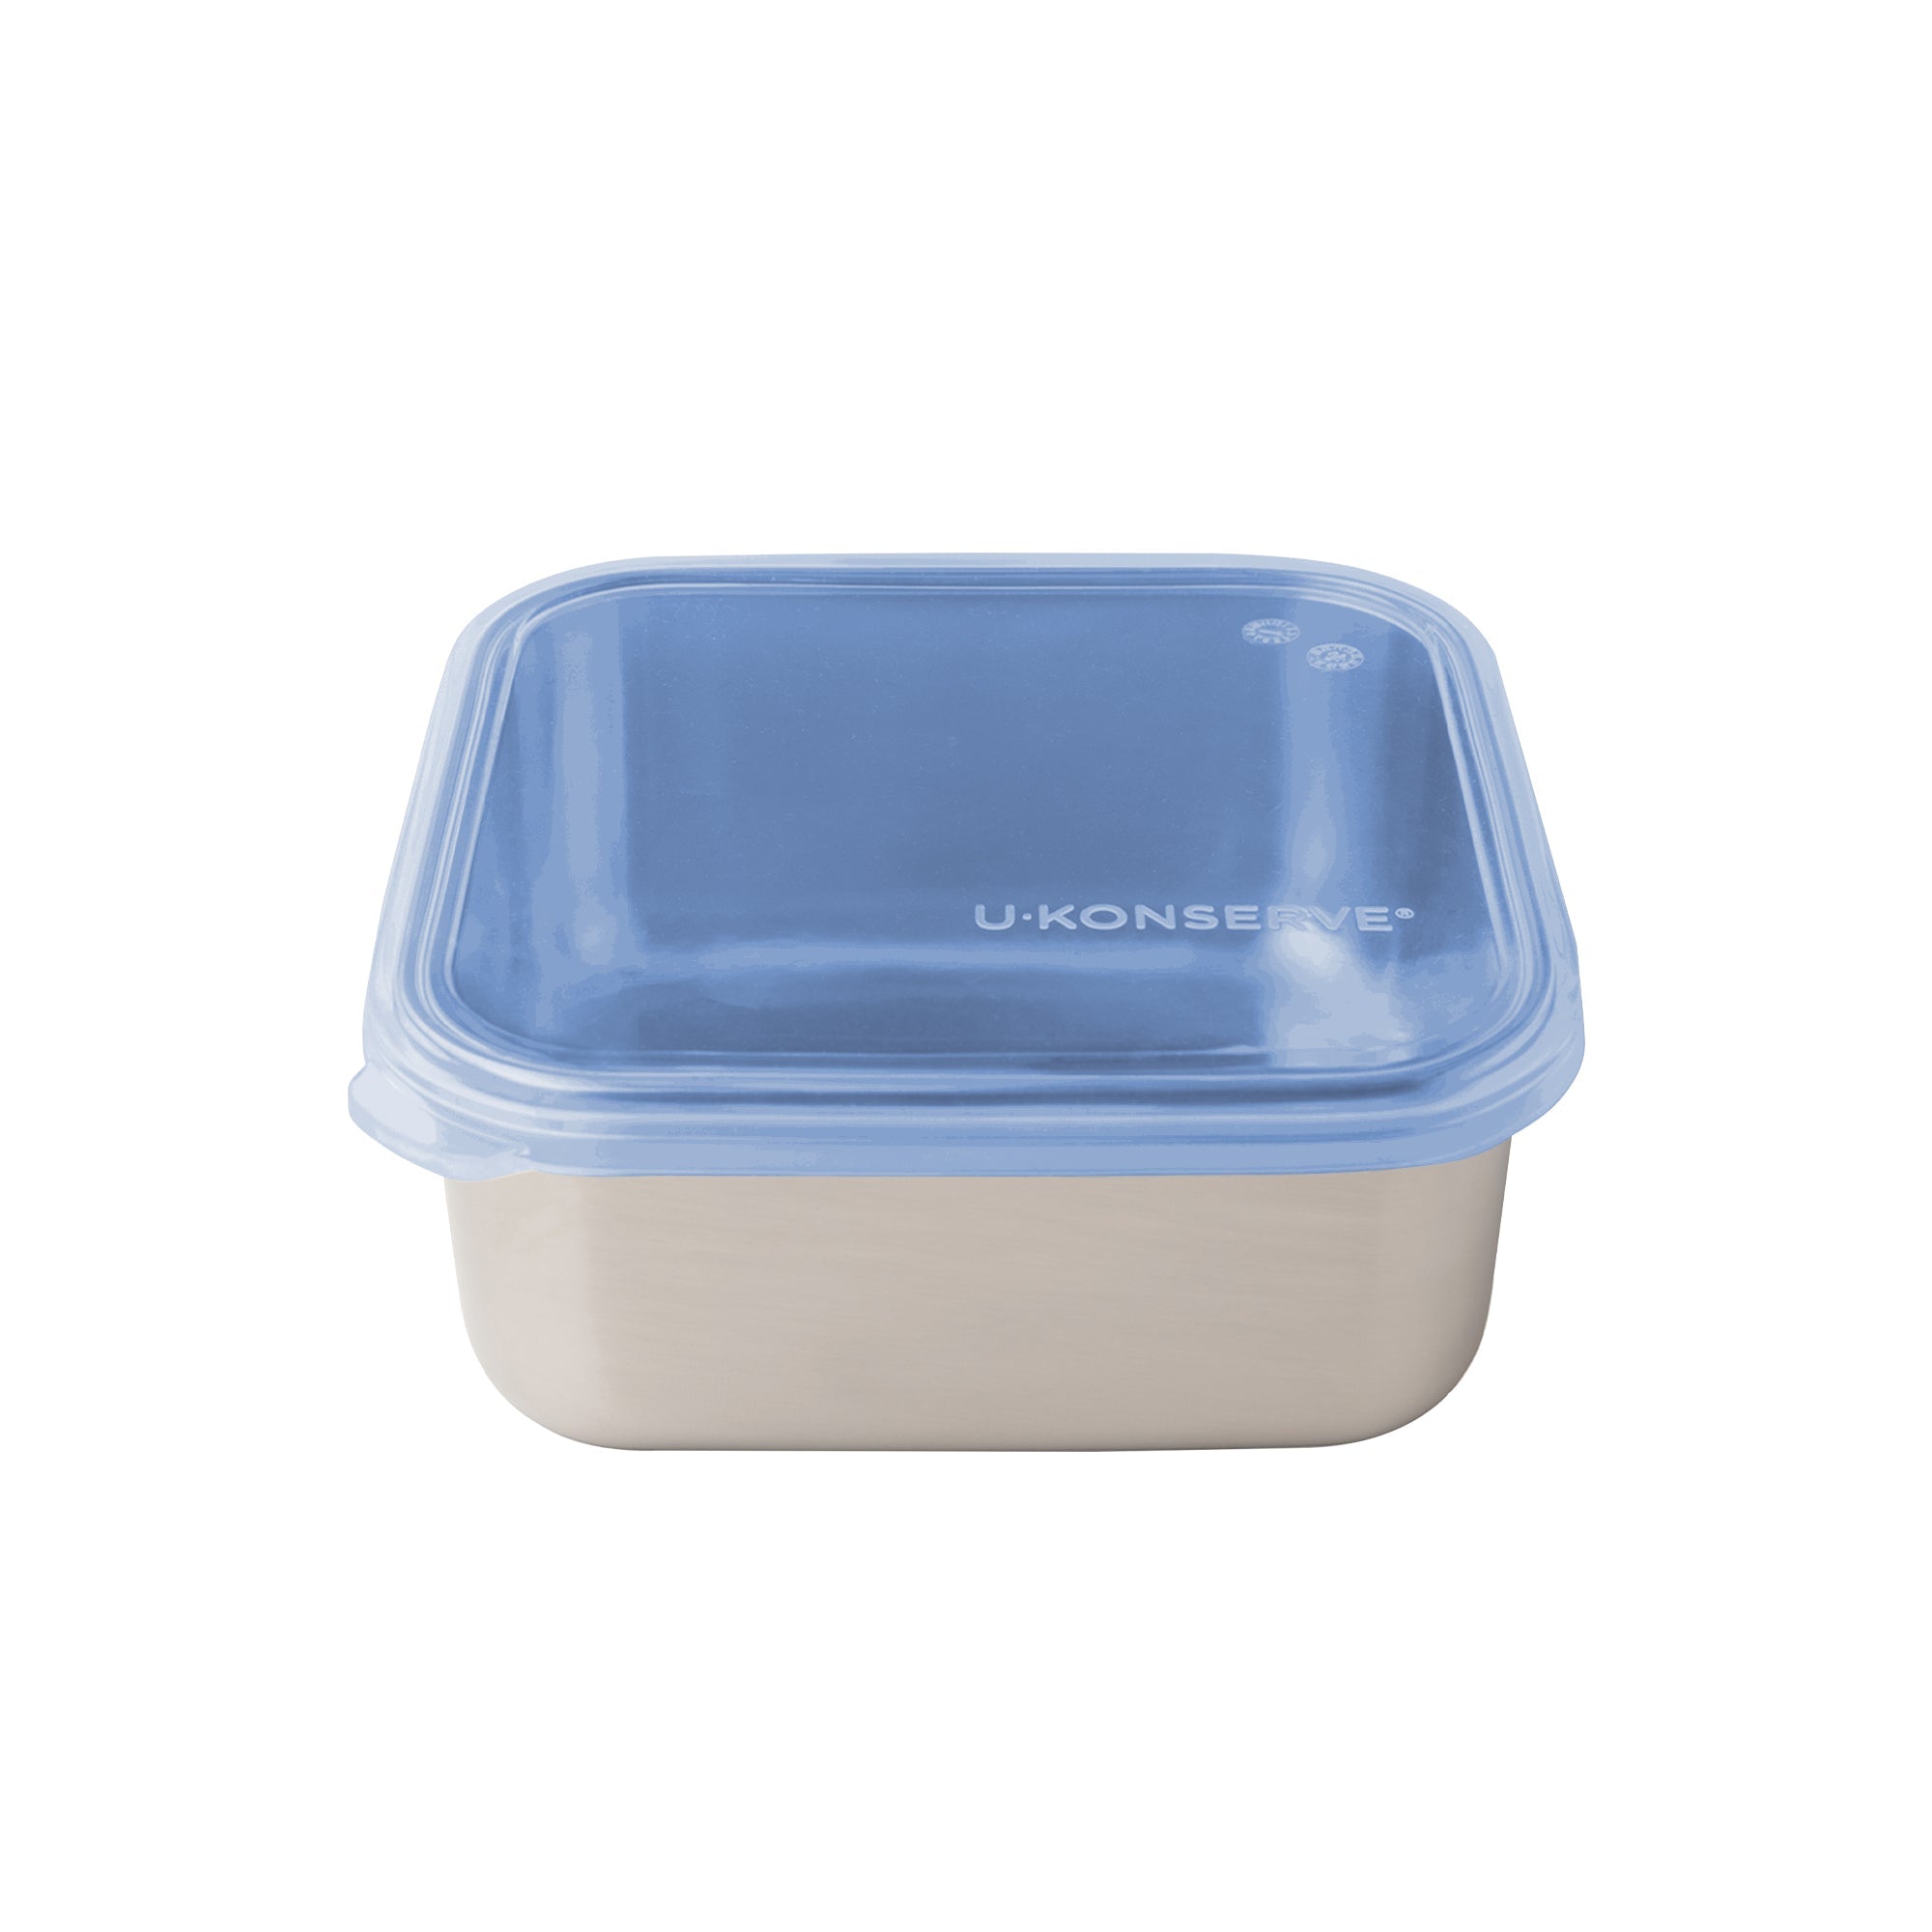 U Konserve Stainless Steel Food Storage Bento Box Container, Leak Proof Silicone Lid Dishwasher Safe - Plastic Free (50oz Teal)